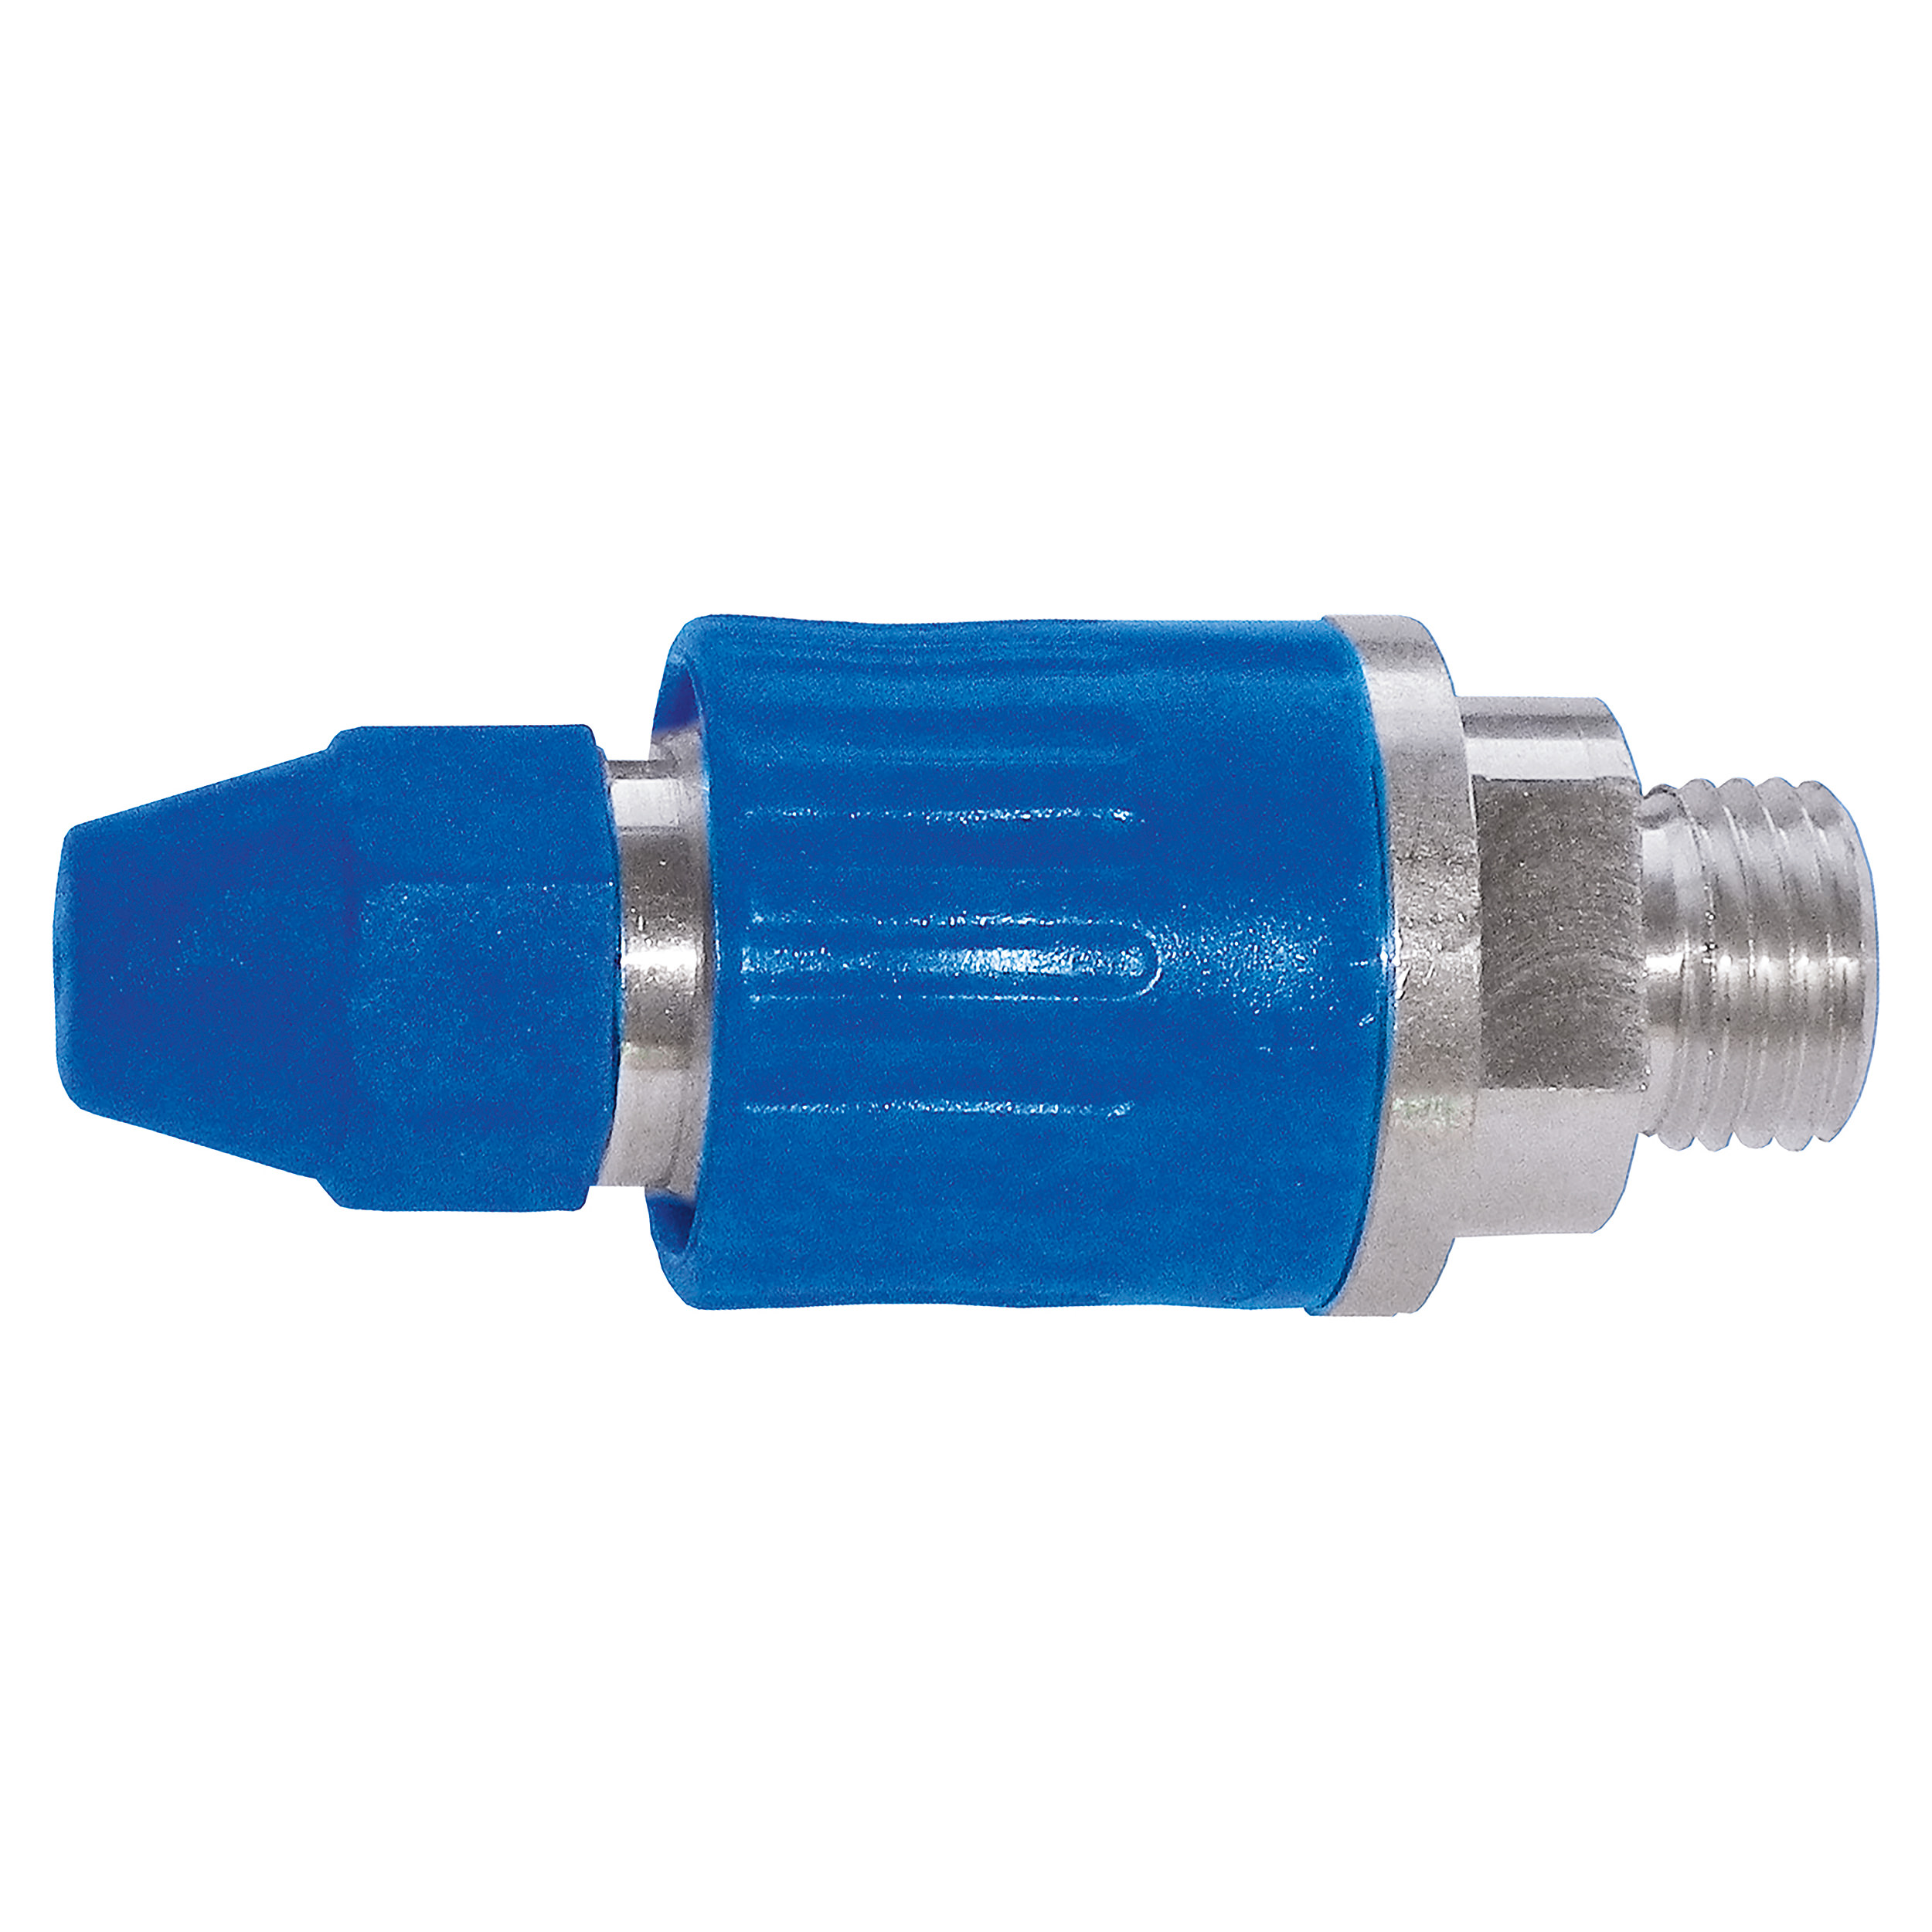 Adjustable air-saving nozzle, connection thread: M12 × 1.25, length: 57 mm, MOP 145 psi/10 bar, aluminium, POM, blue